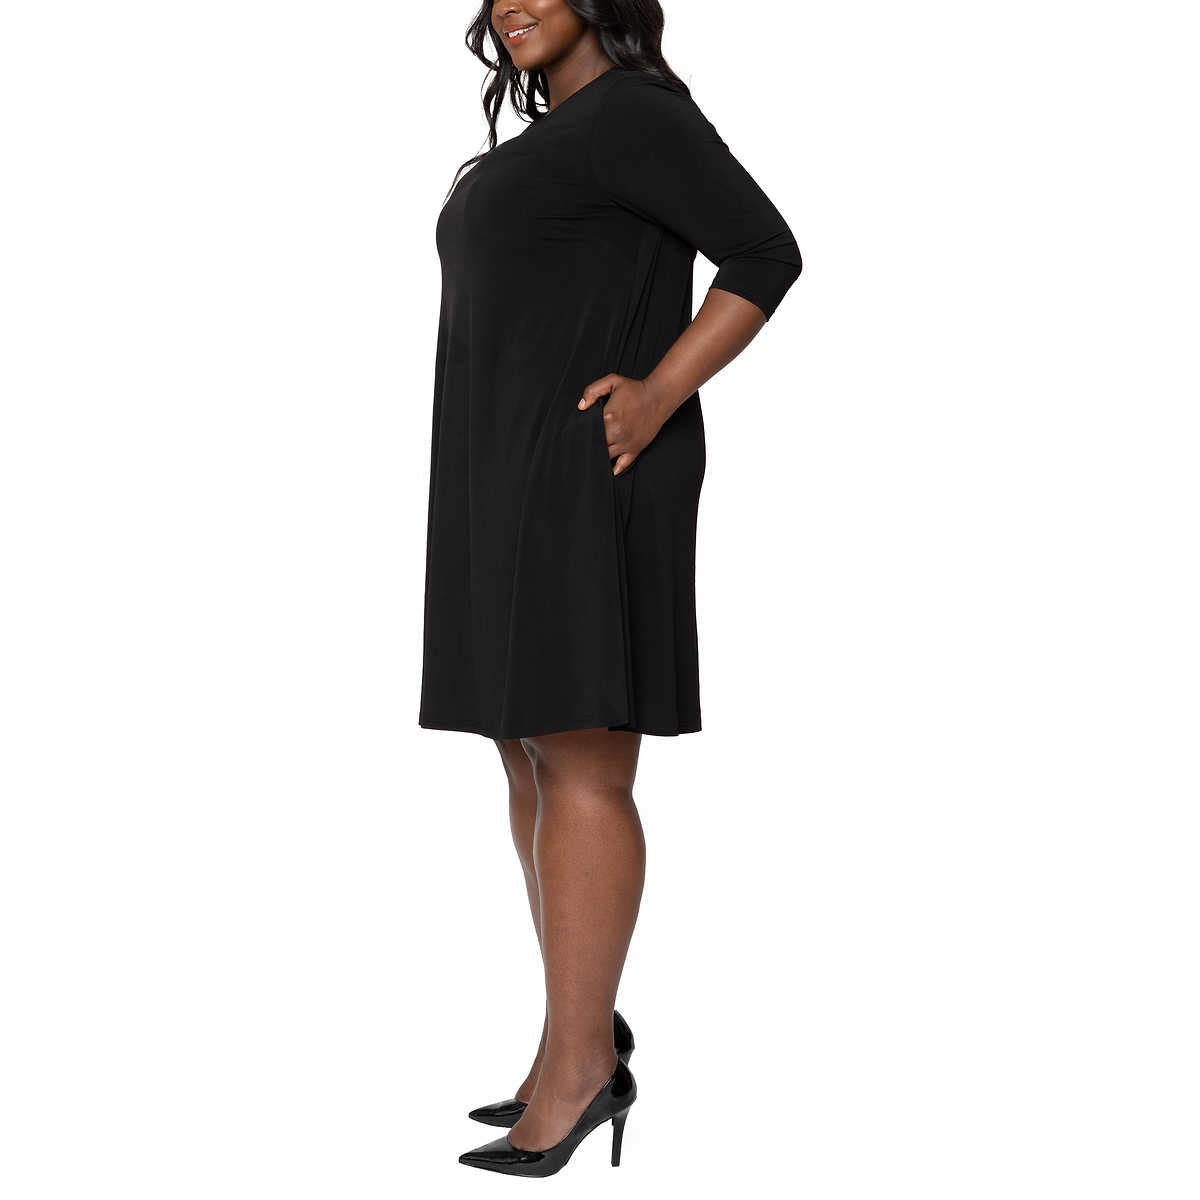 Leota Women's Wrinkle-free Quarter Sleeve Swing Mini Dress